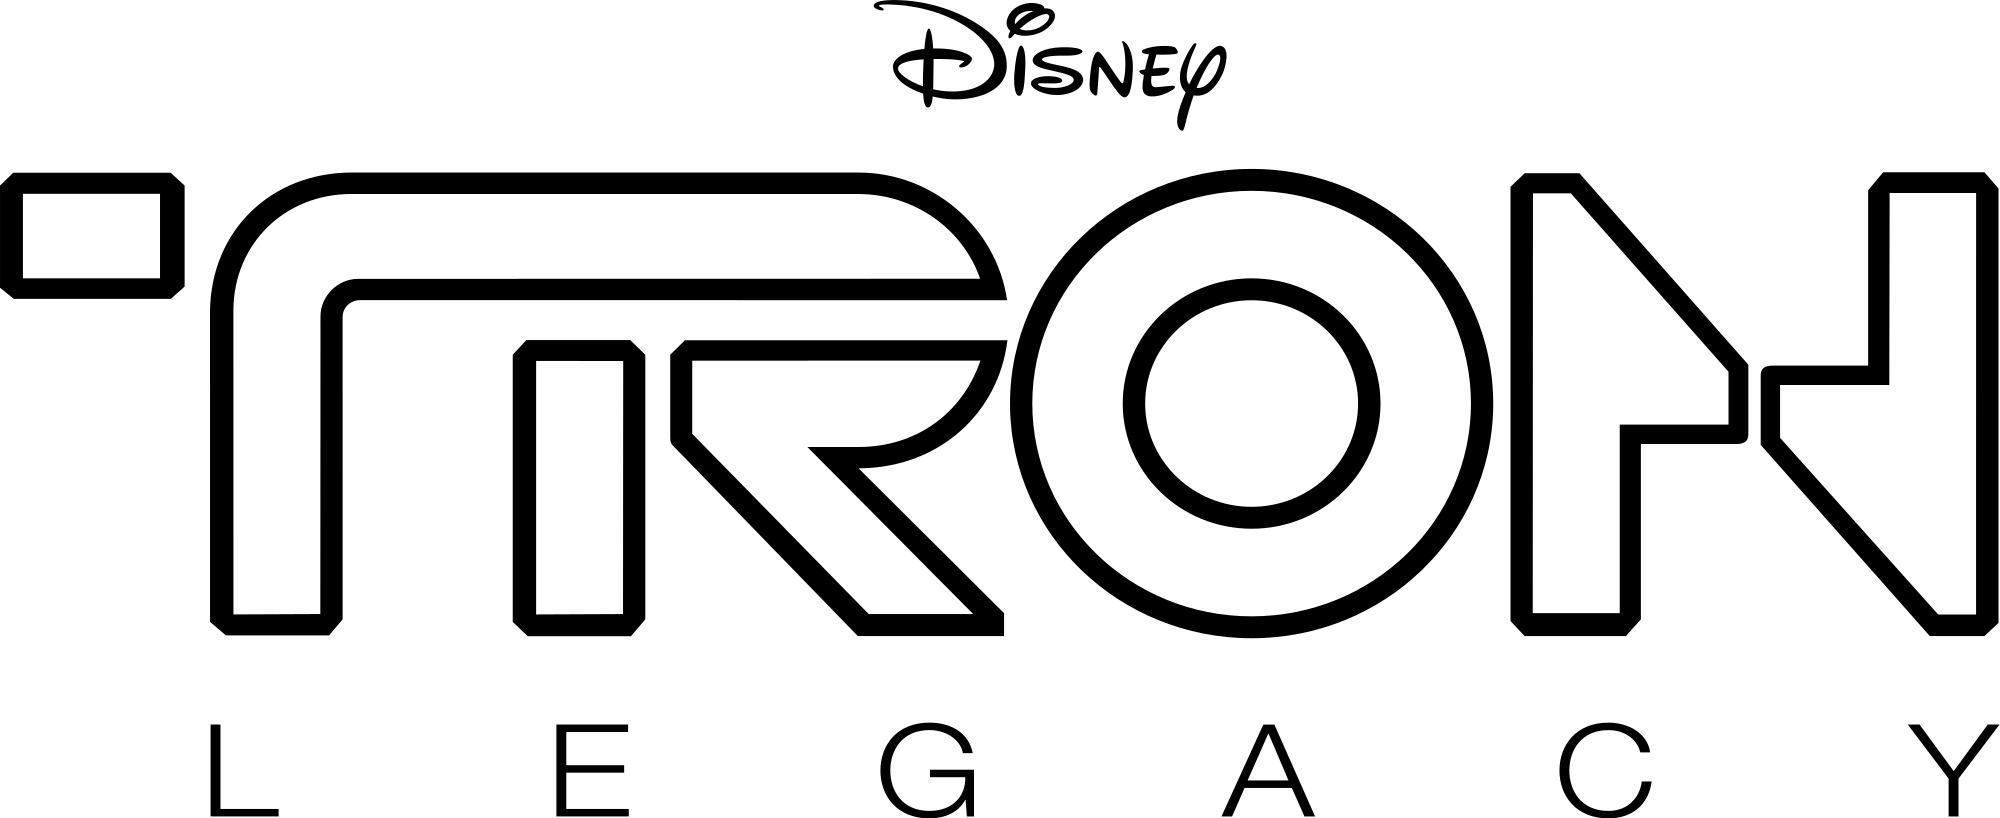 Tron Movie Logo - File:Tron Legacy Logo.svg - Wikimedia Commons